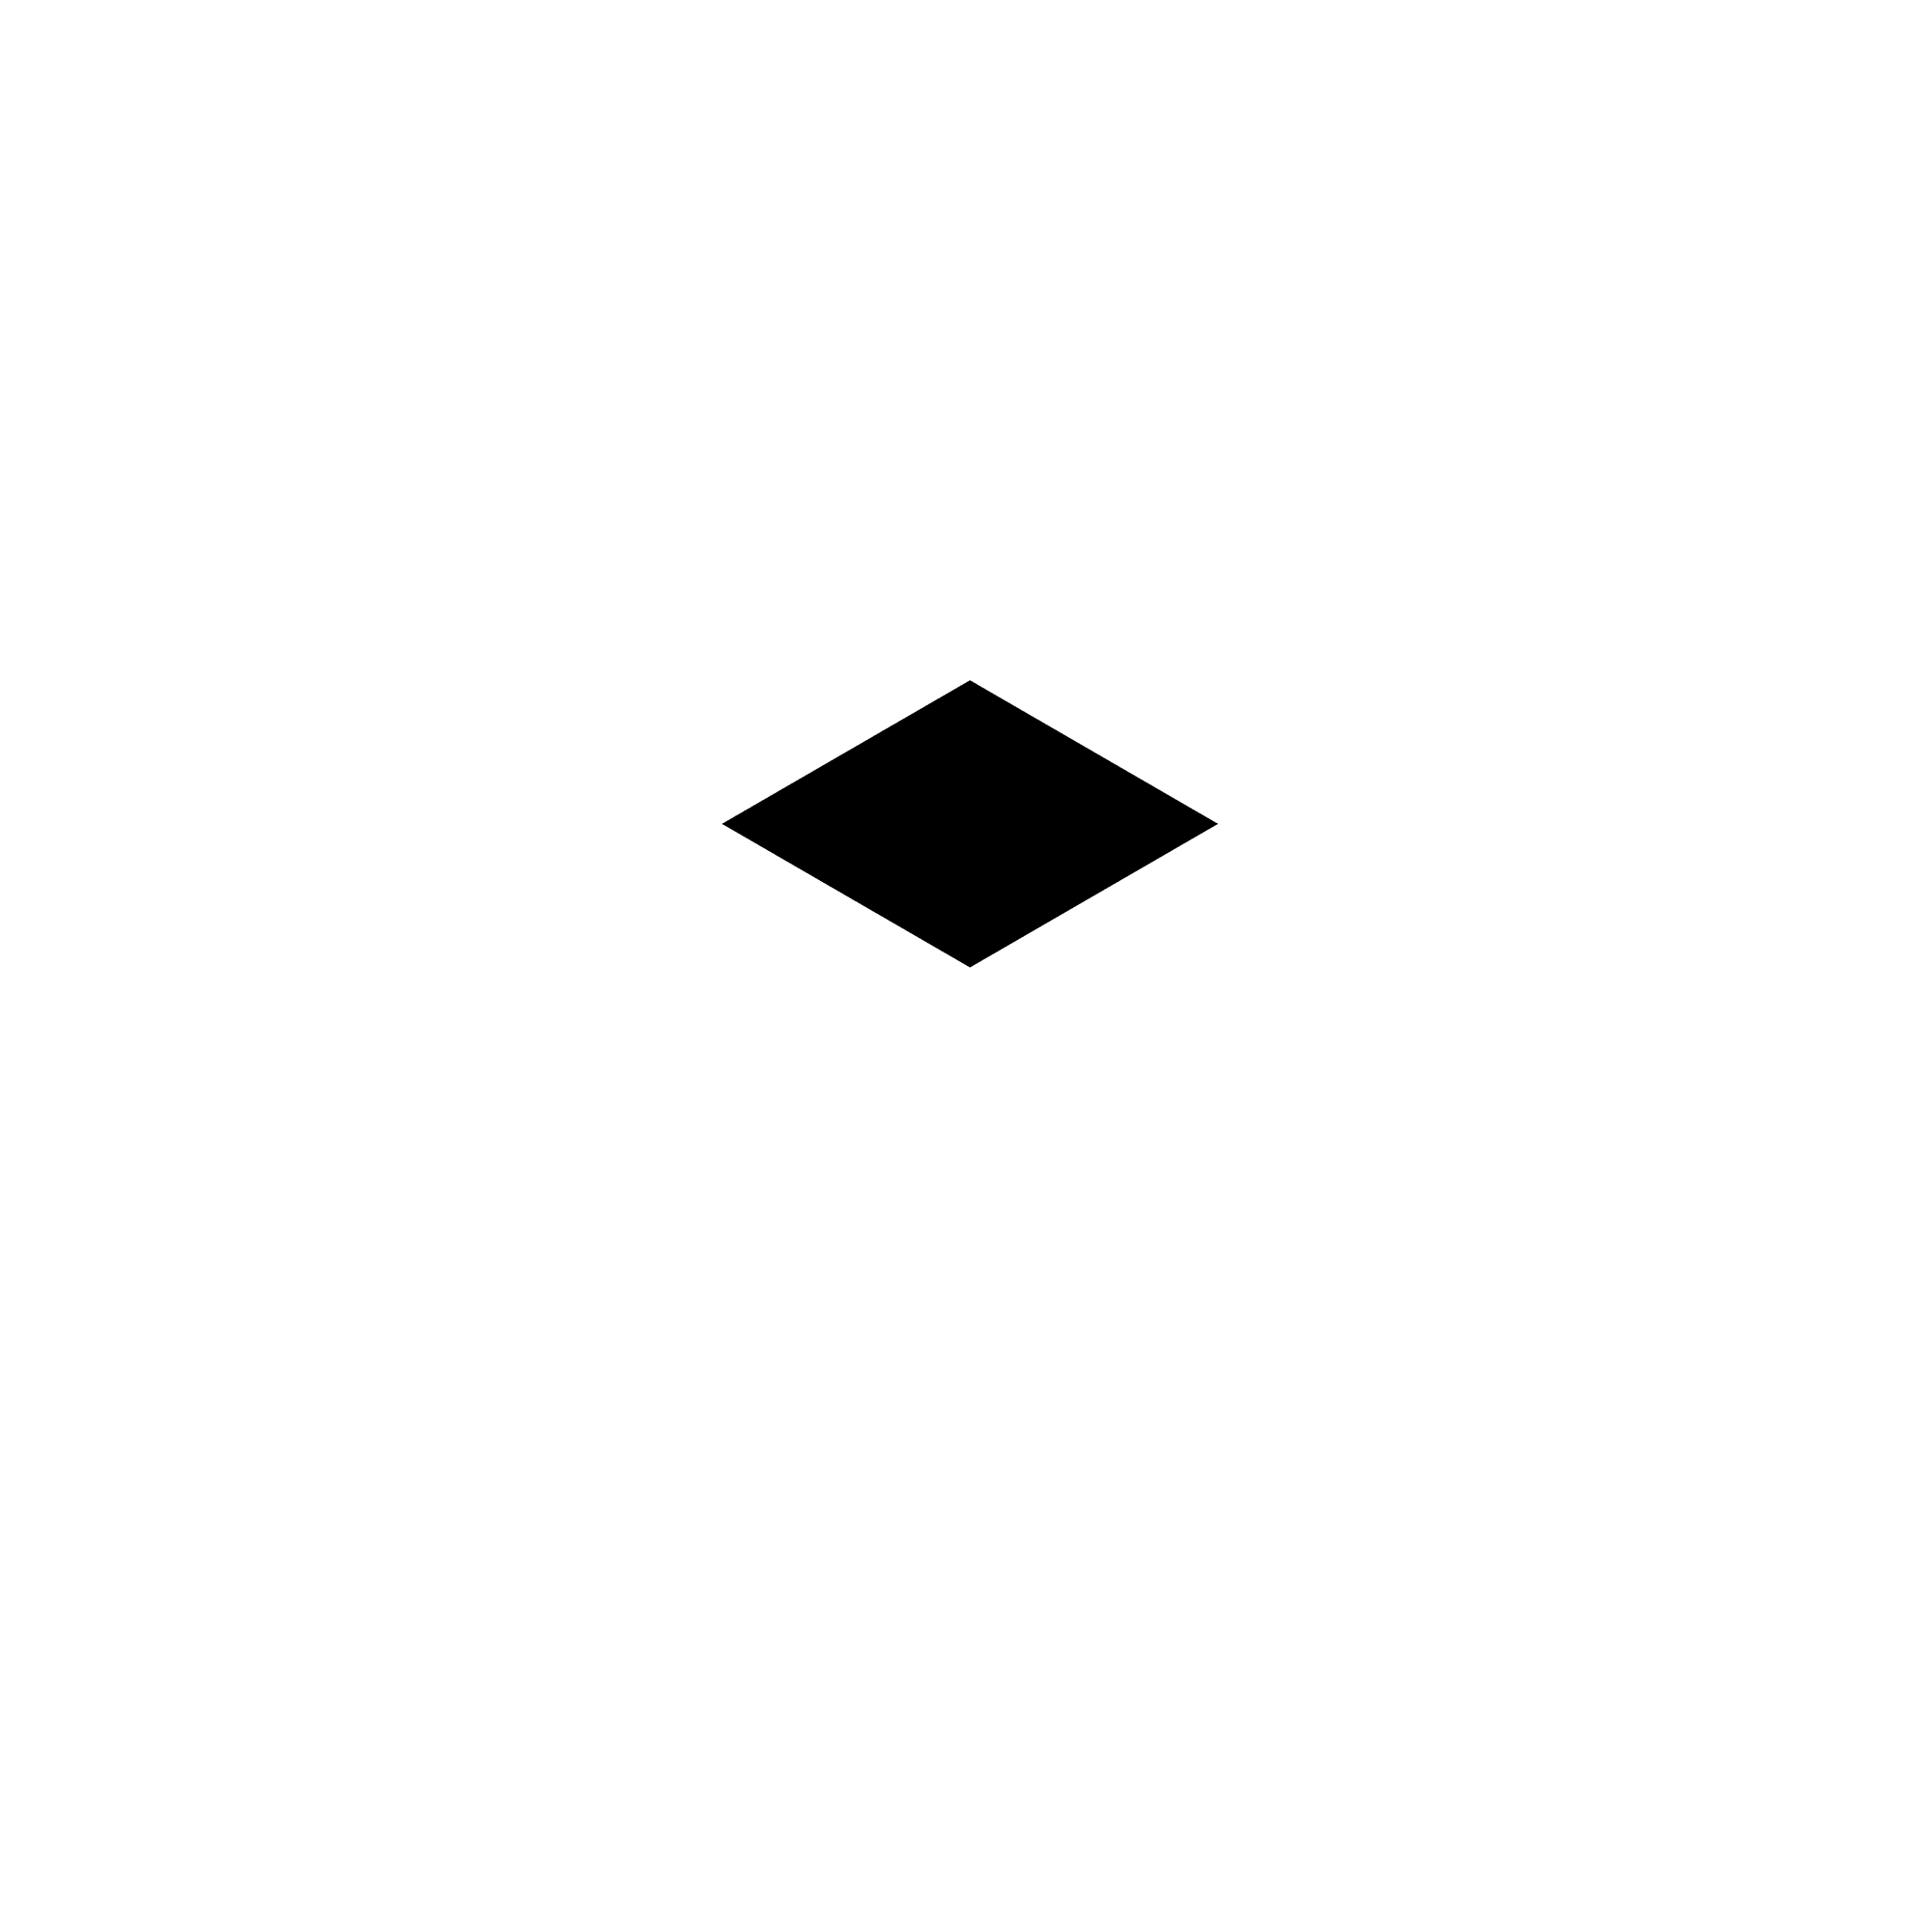 moz-flikflak-gif-logo4aug